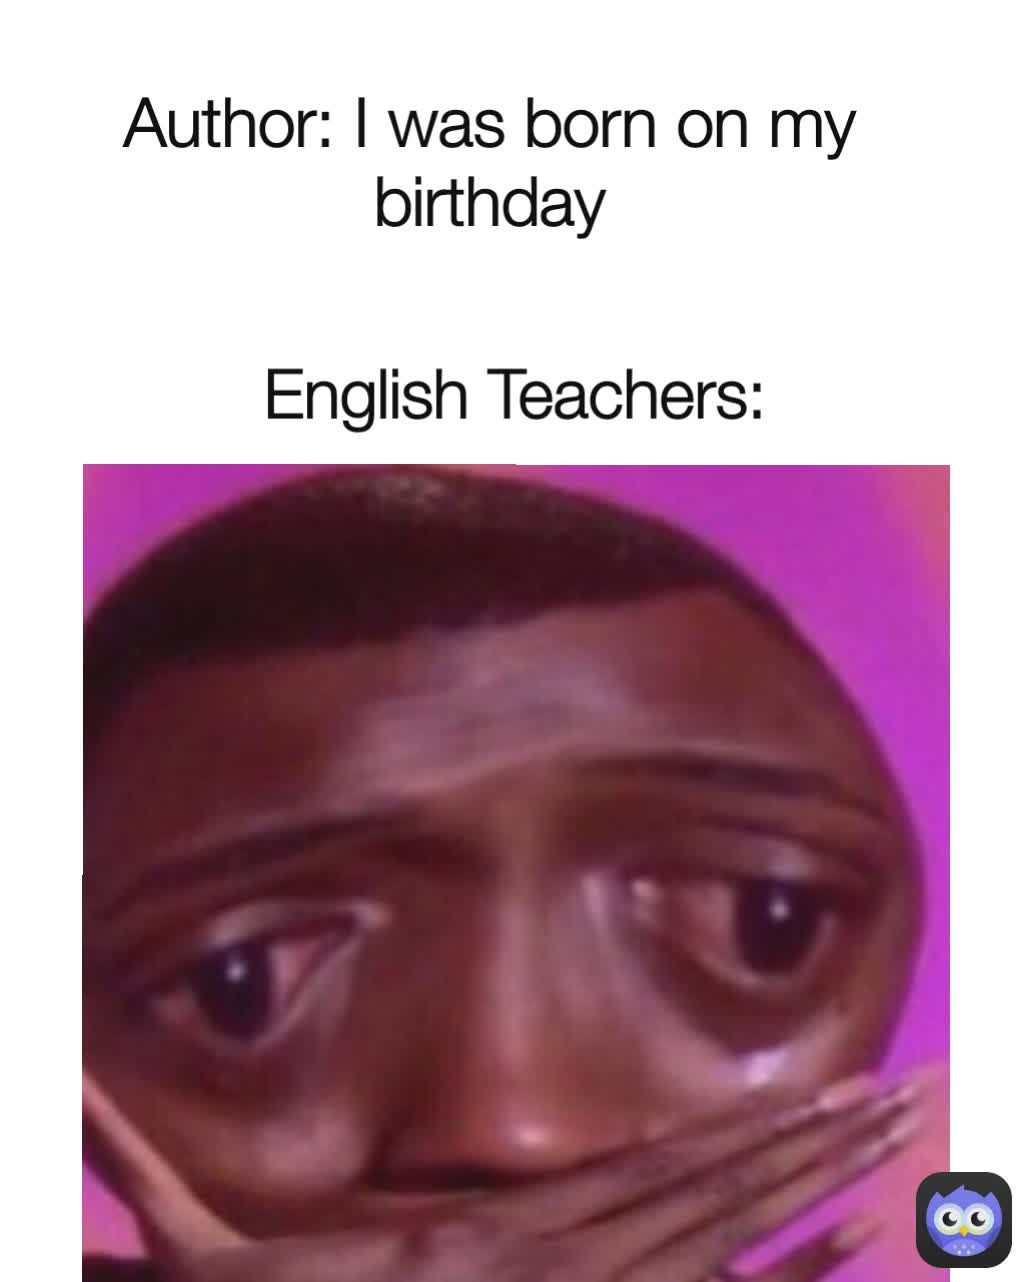 English Teachers: Author: I was born on my birthday